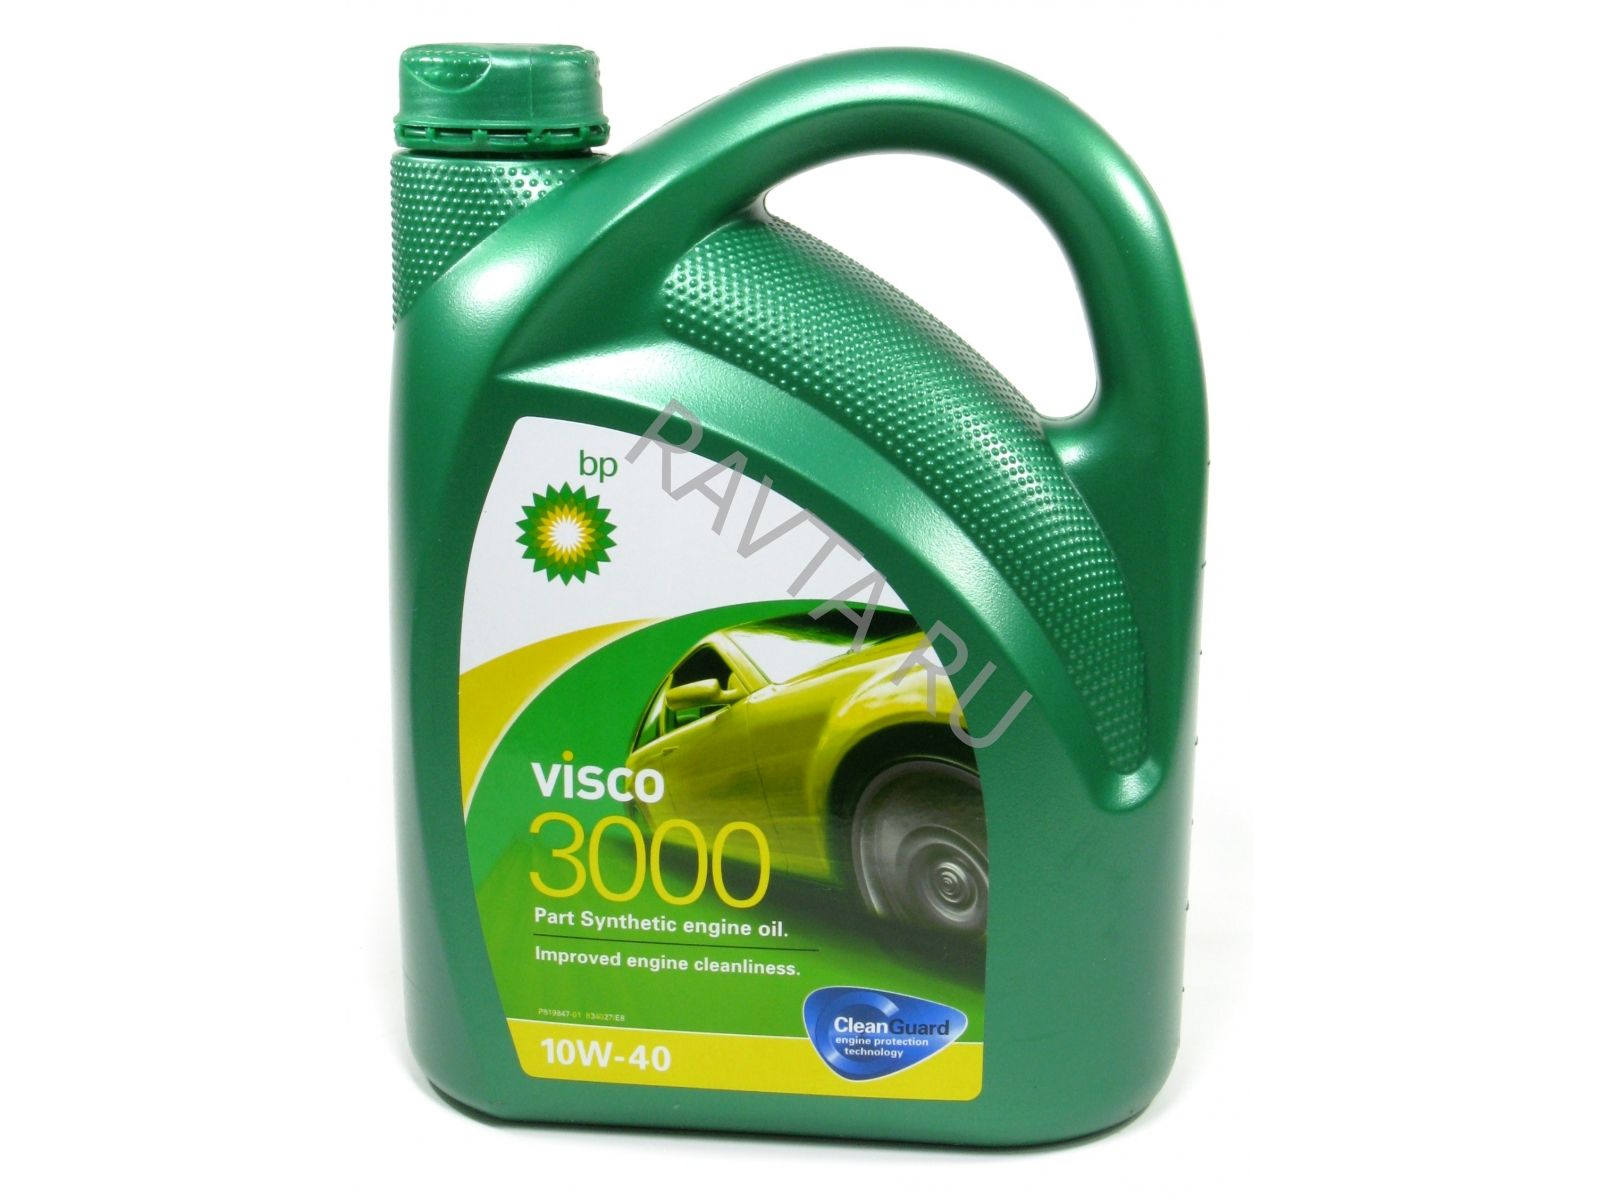 Виско купить. BP Visco 5000 5w-40 4л. BP Visco 3000 a3/b4 10w-40 4л. Моторное масло BP Visco 3000. Моторное масло Visco 3000 10w-40.